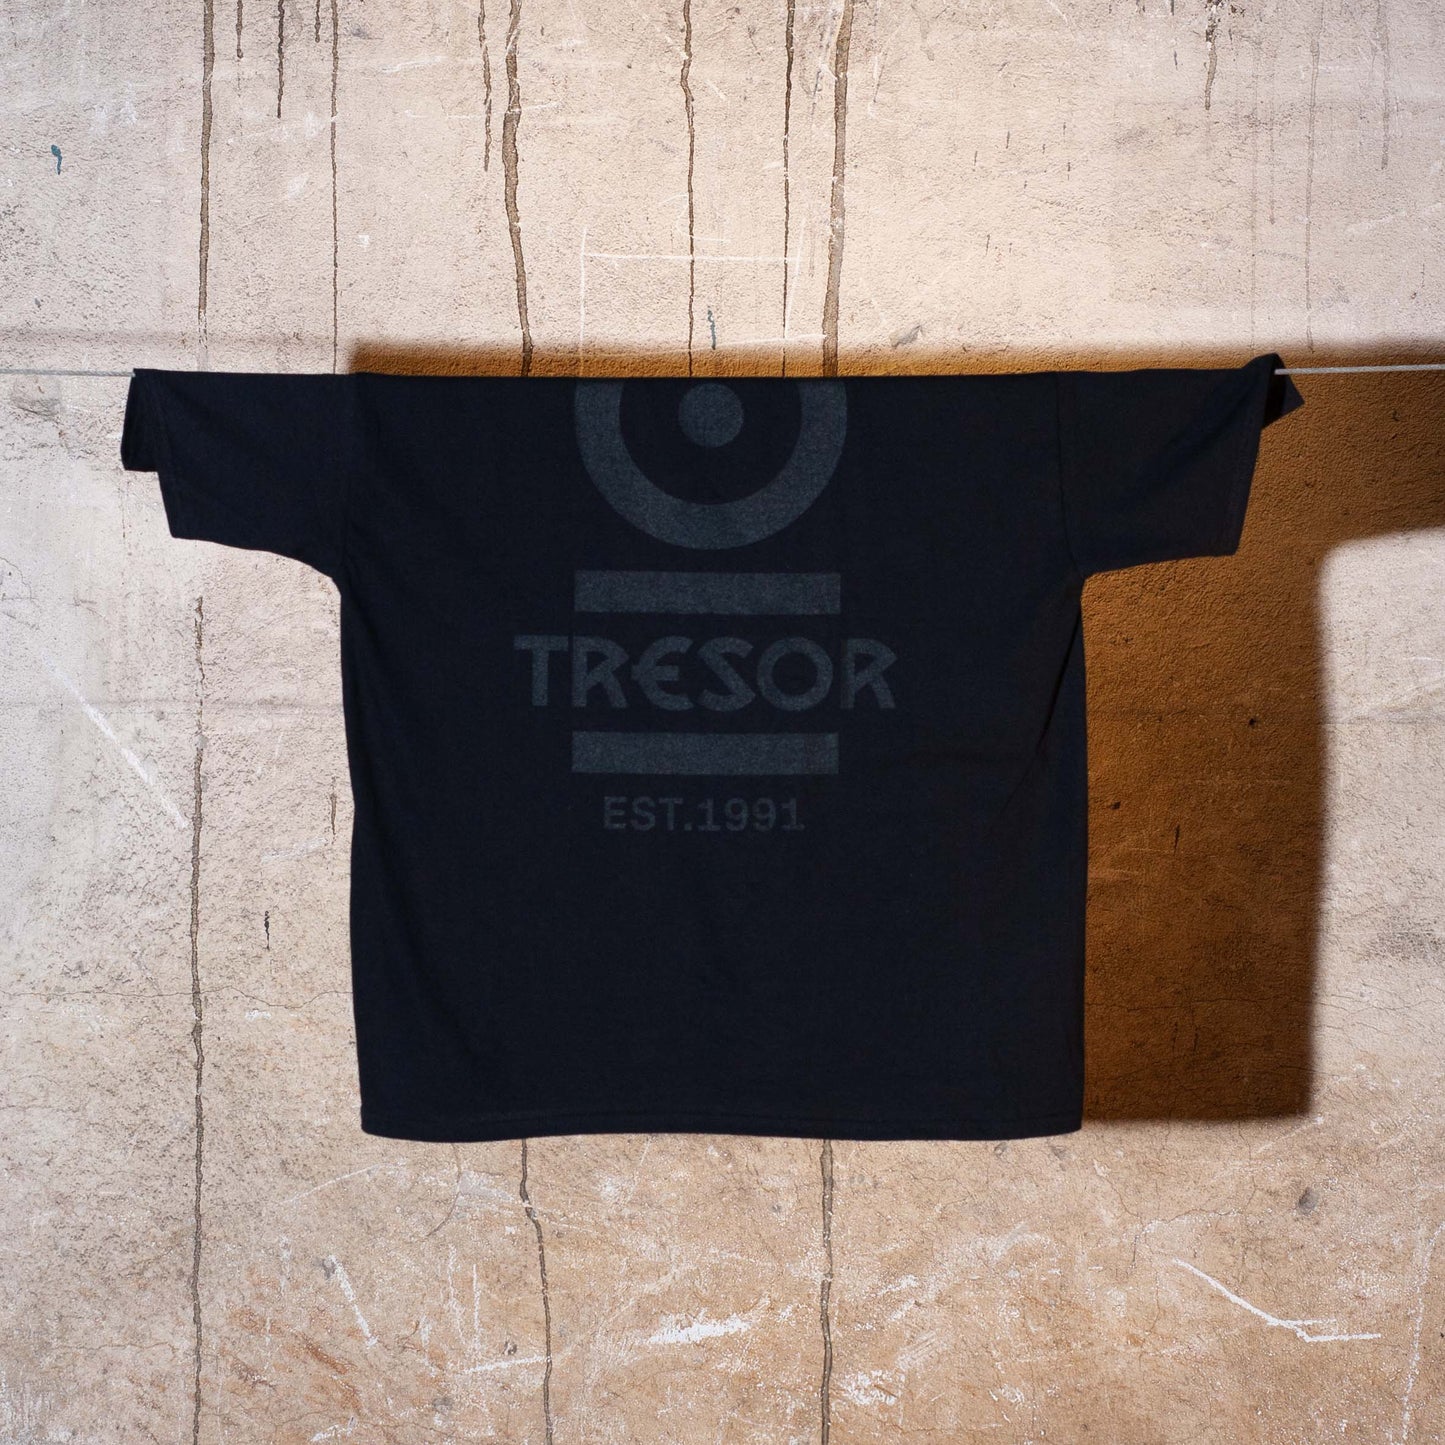 Tresor Classic T-Shirt (Black + Black)